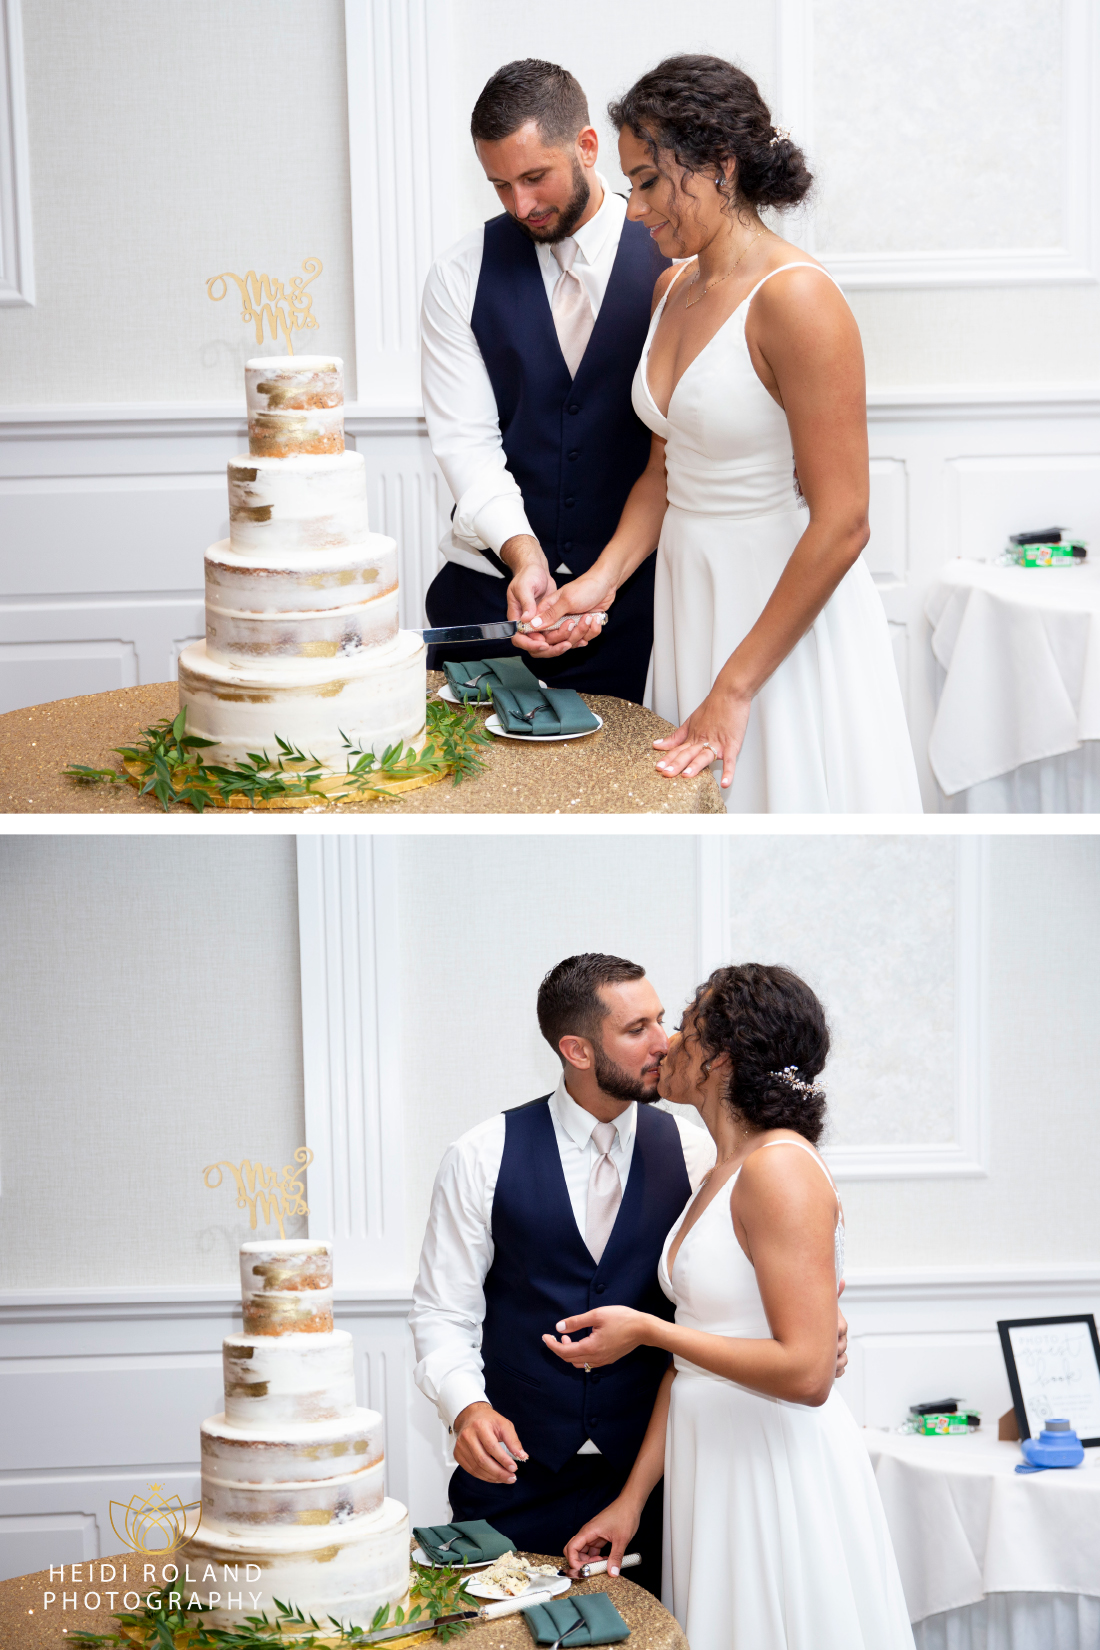 Bride and groom Cake cutting at The Radnor Hotel ballroom wedding